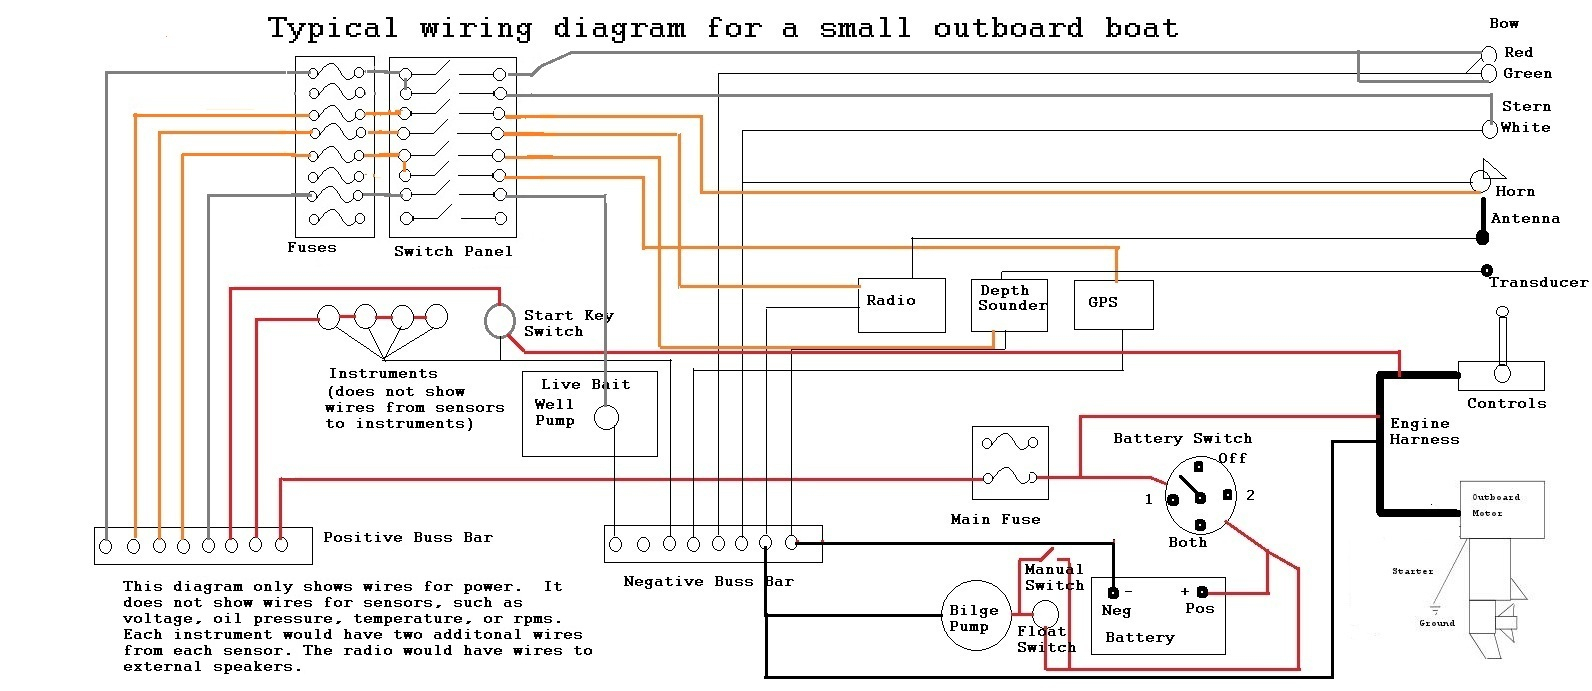 Simple Boat Wiring - Wiring Diagrams Hubs - Simple House Wiring Diagram Examples